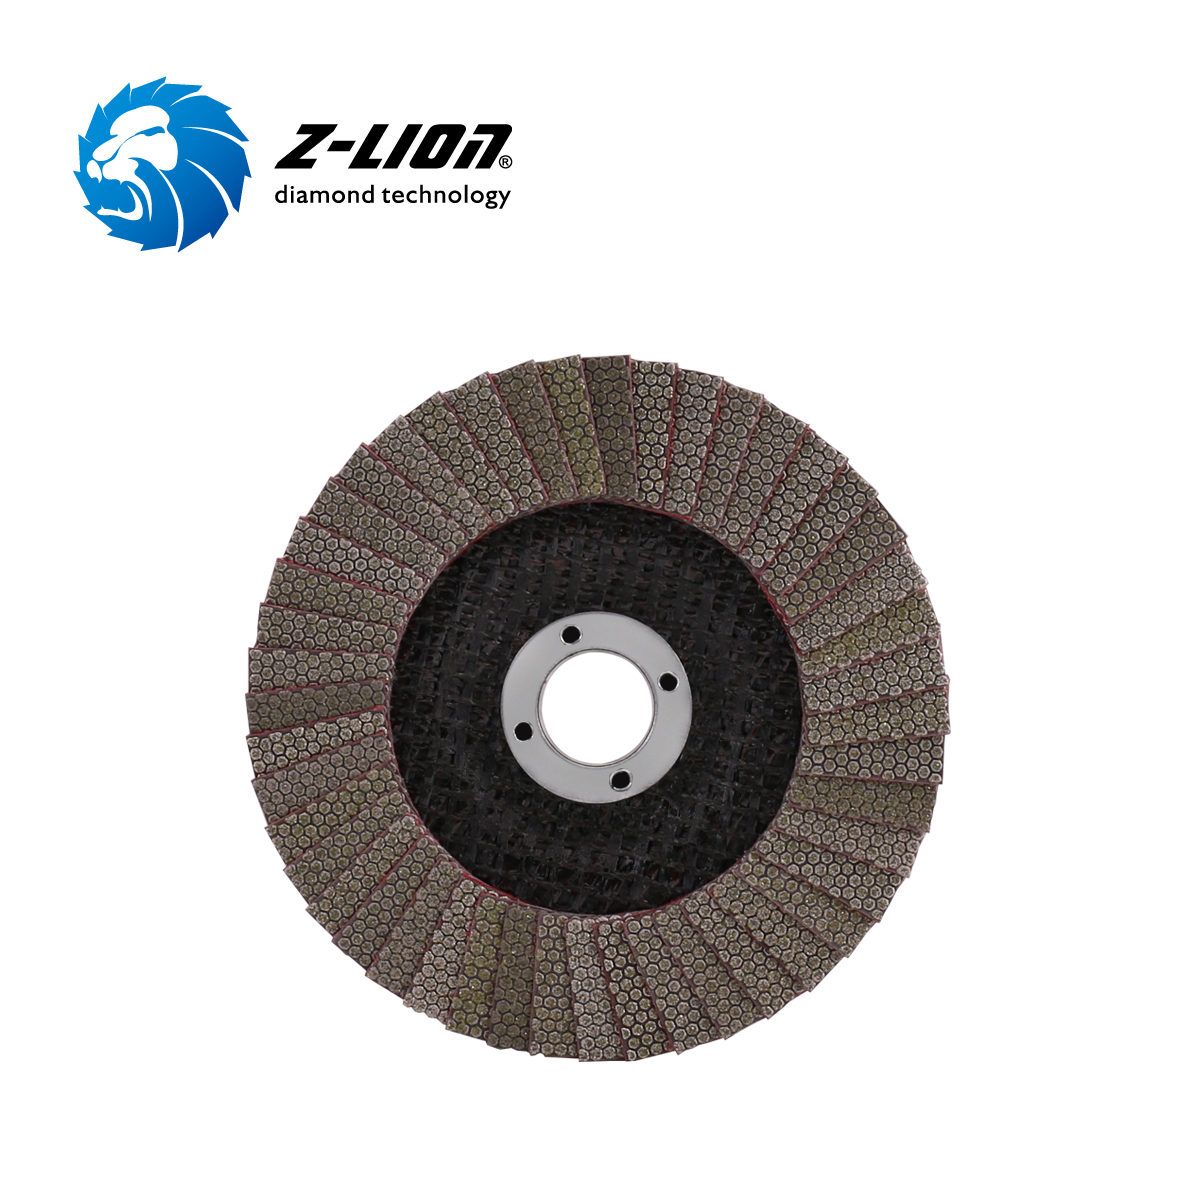 Z-LION Fiberglass Backing Diamond flap discs for glass sanding Featured Image